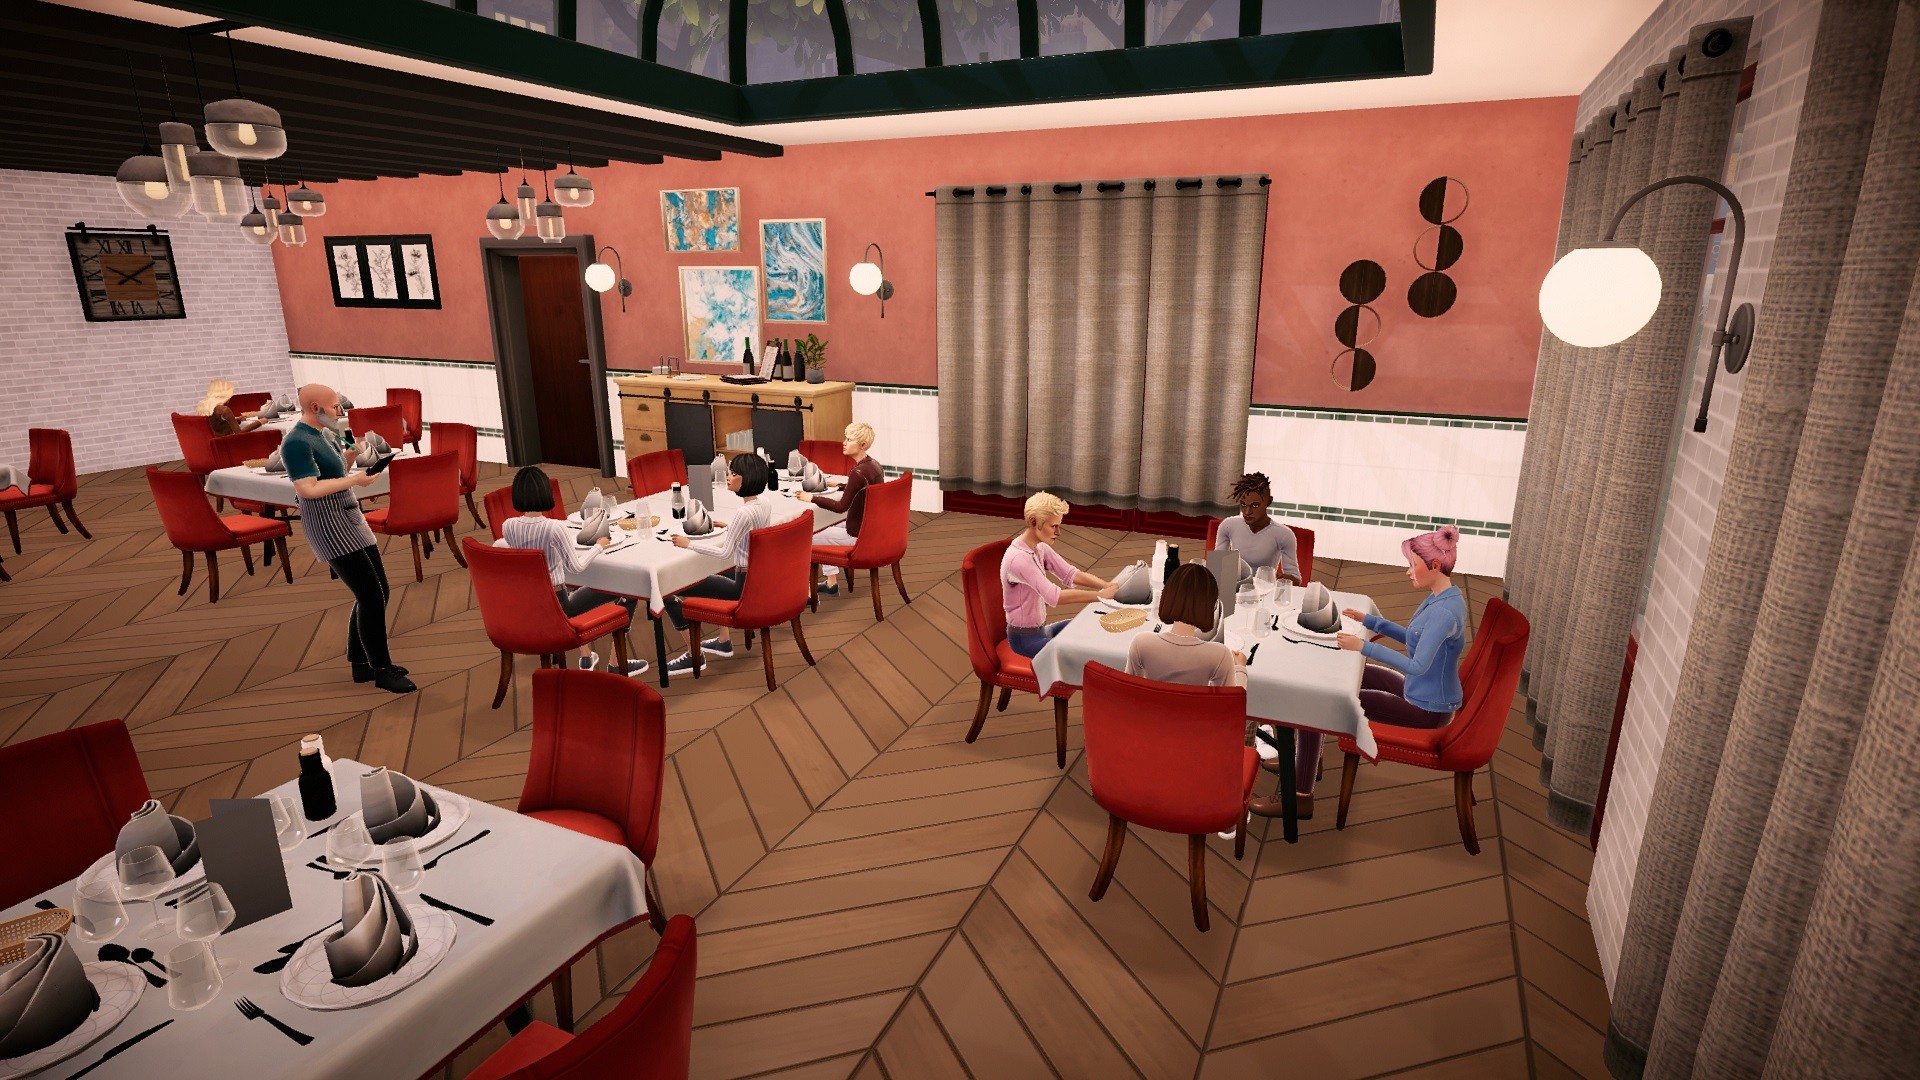 Chef Life: A Restaurant Simulator - screenshot 3